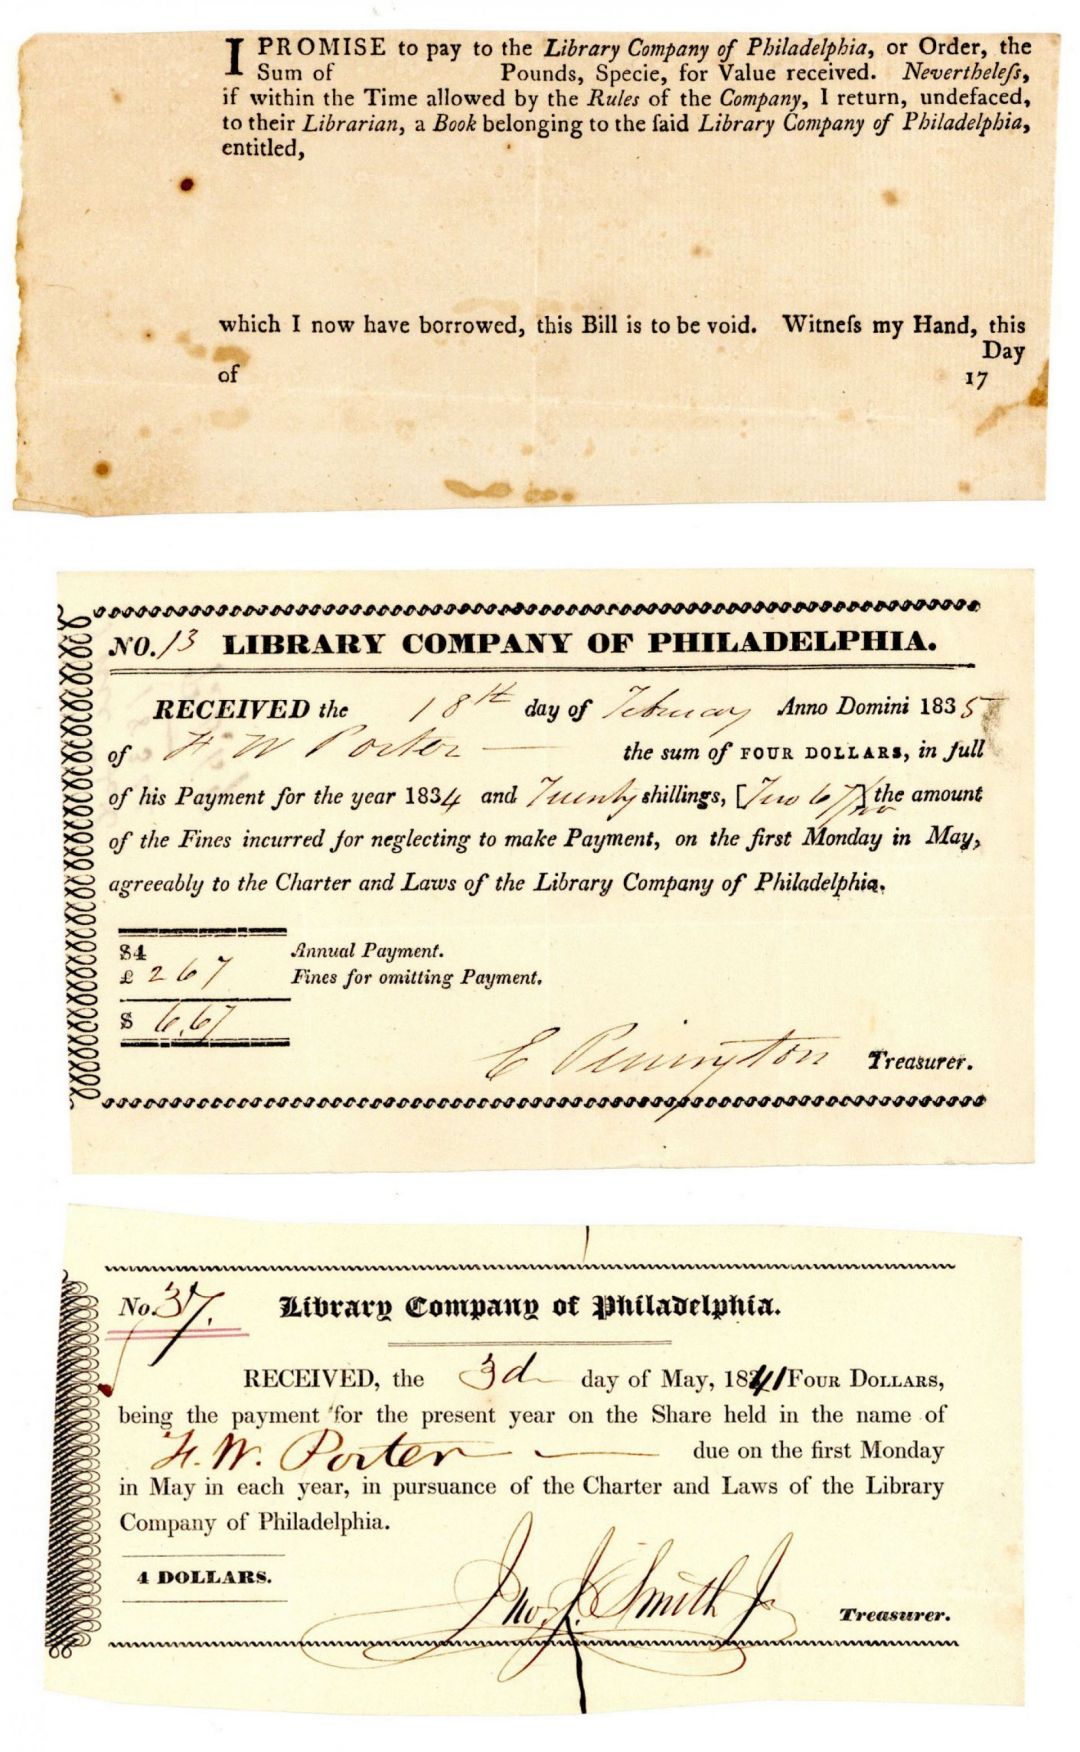 Library Company of Philadelphia - Early Stocks and Bonds